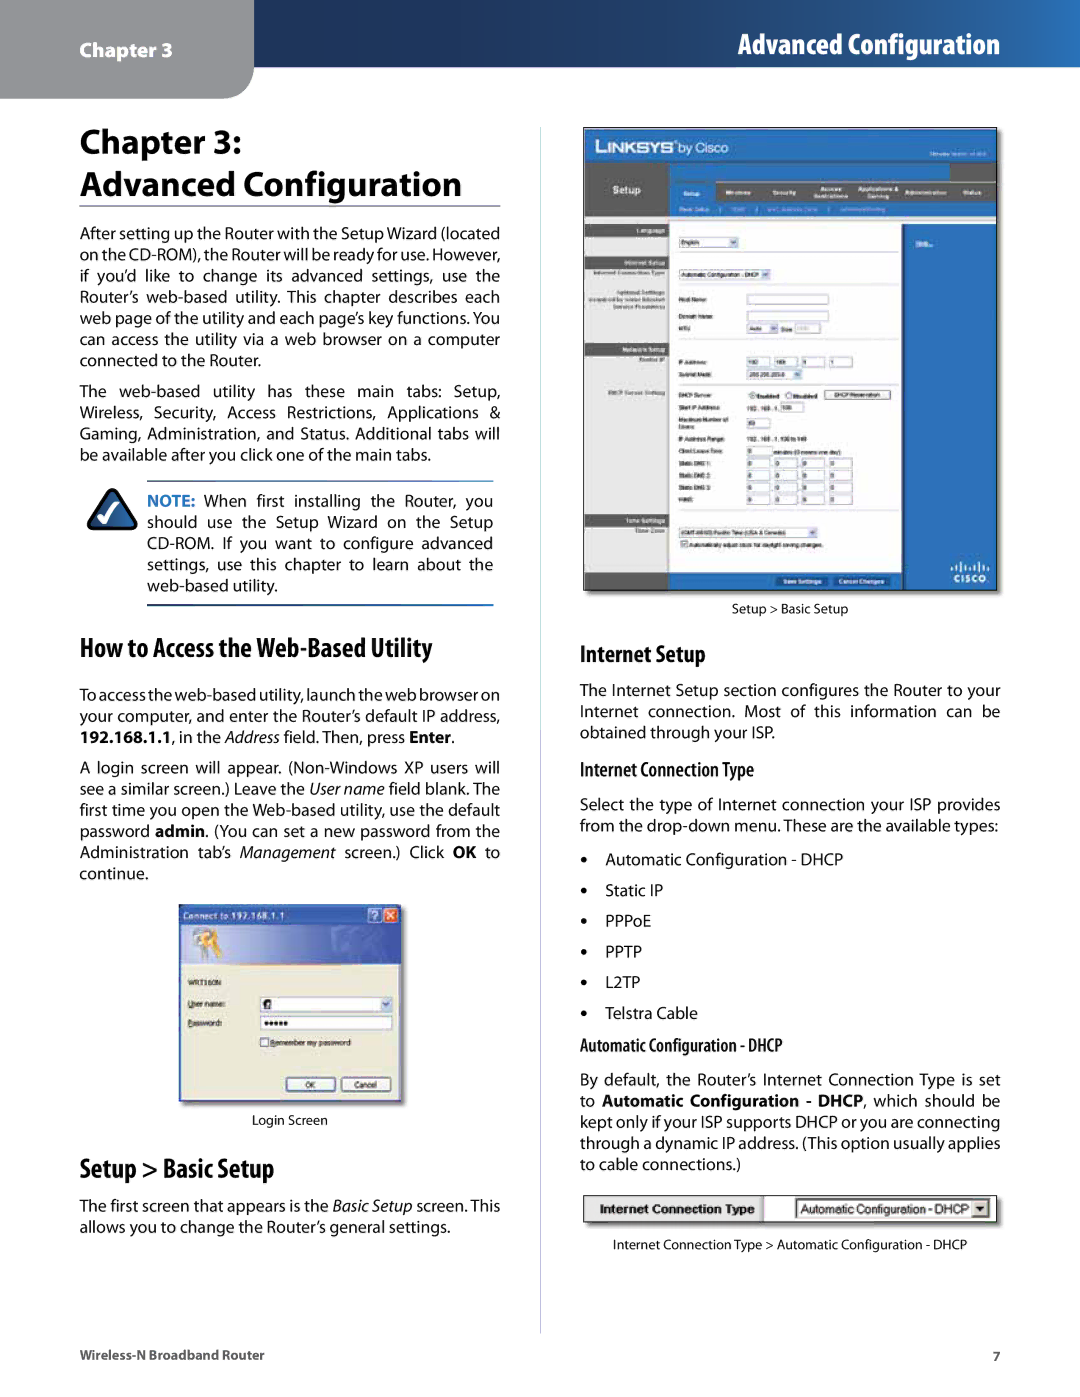 Linksys WRT160N Chapter Advanced Configuration, How to Access the Web-Based Utility, Setup Basic Setup, Internet Setup 